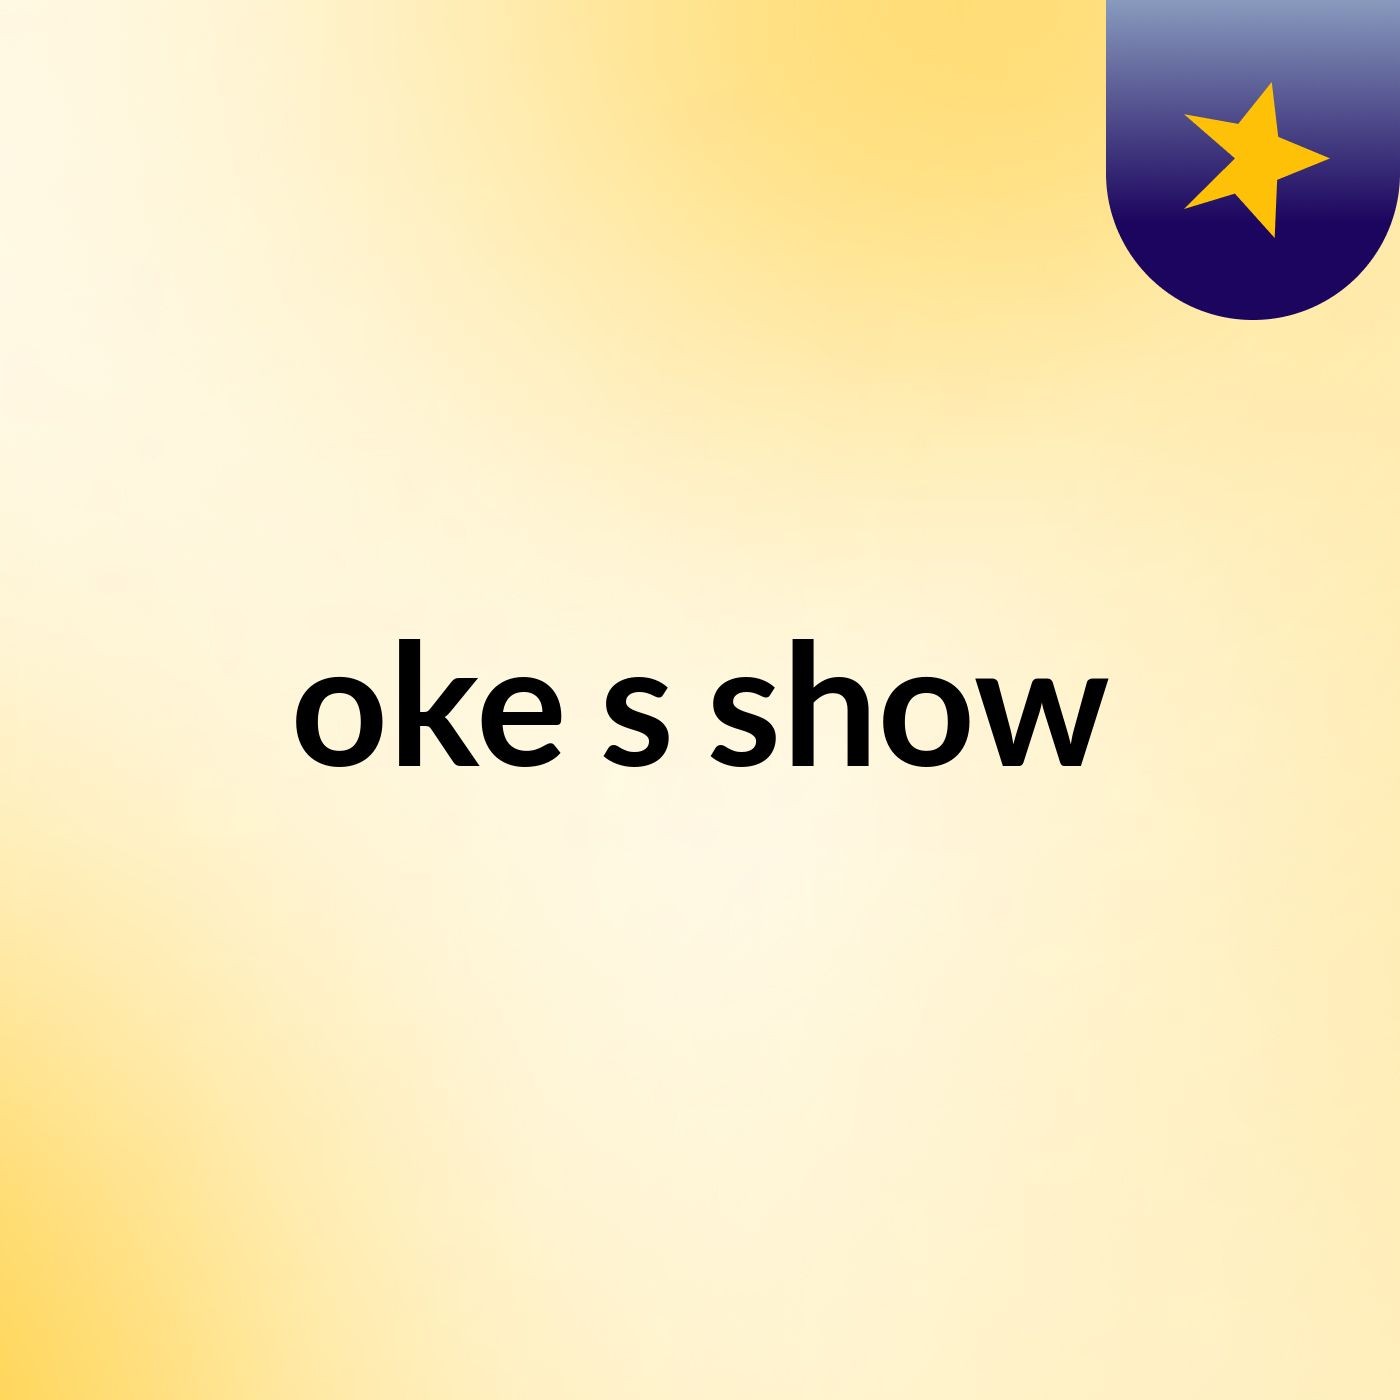 oke's show